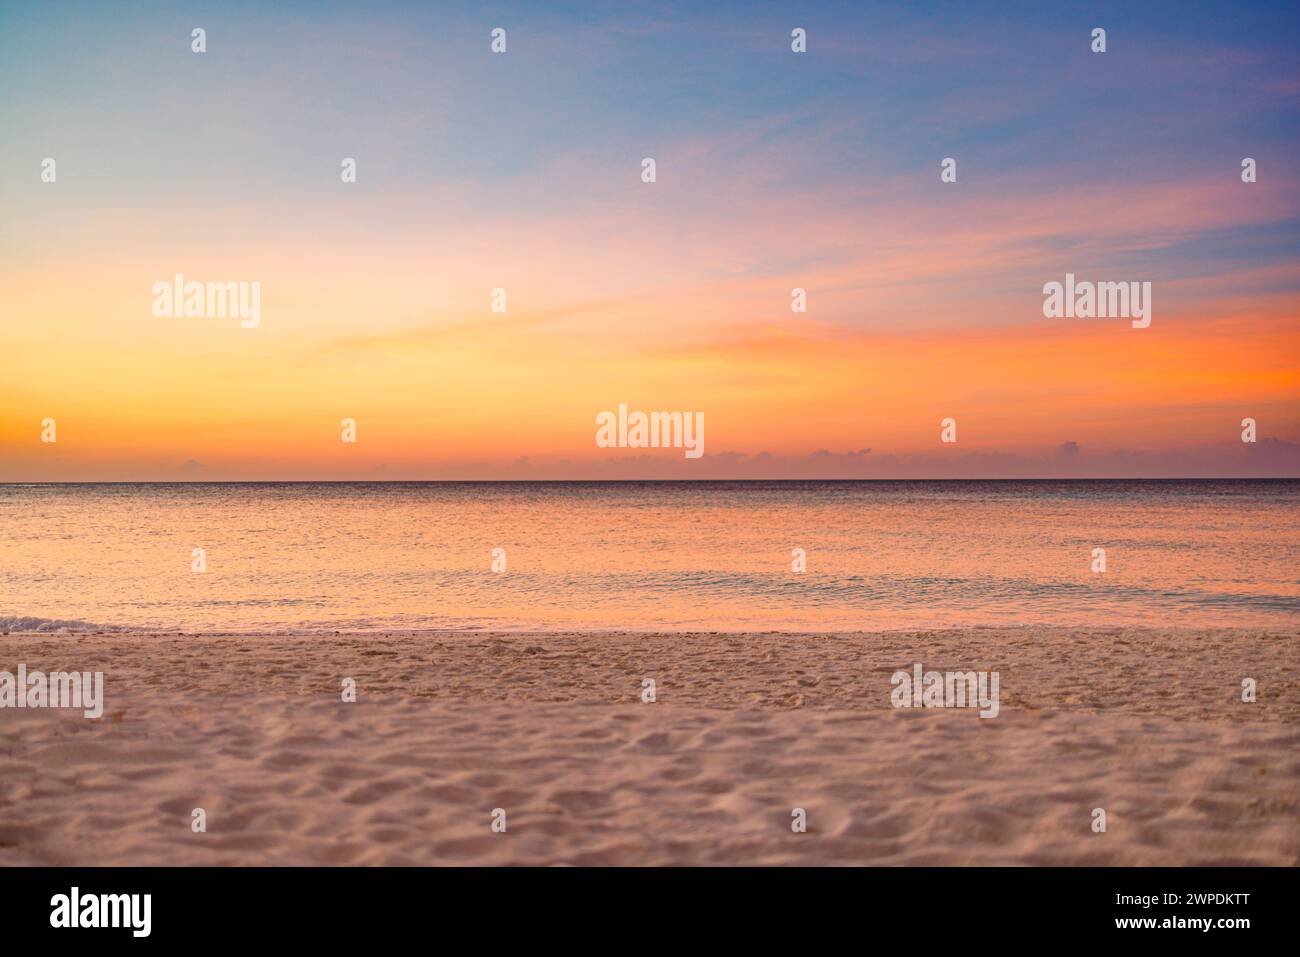 Sea sand sky concept, sunset colors clouds, horizon, horizontal background banner. Inspirational nature landscape, beautiful colors, wonderful scenery Stock Photo